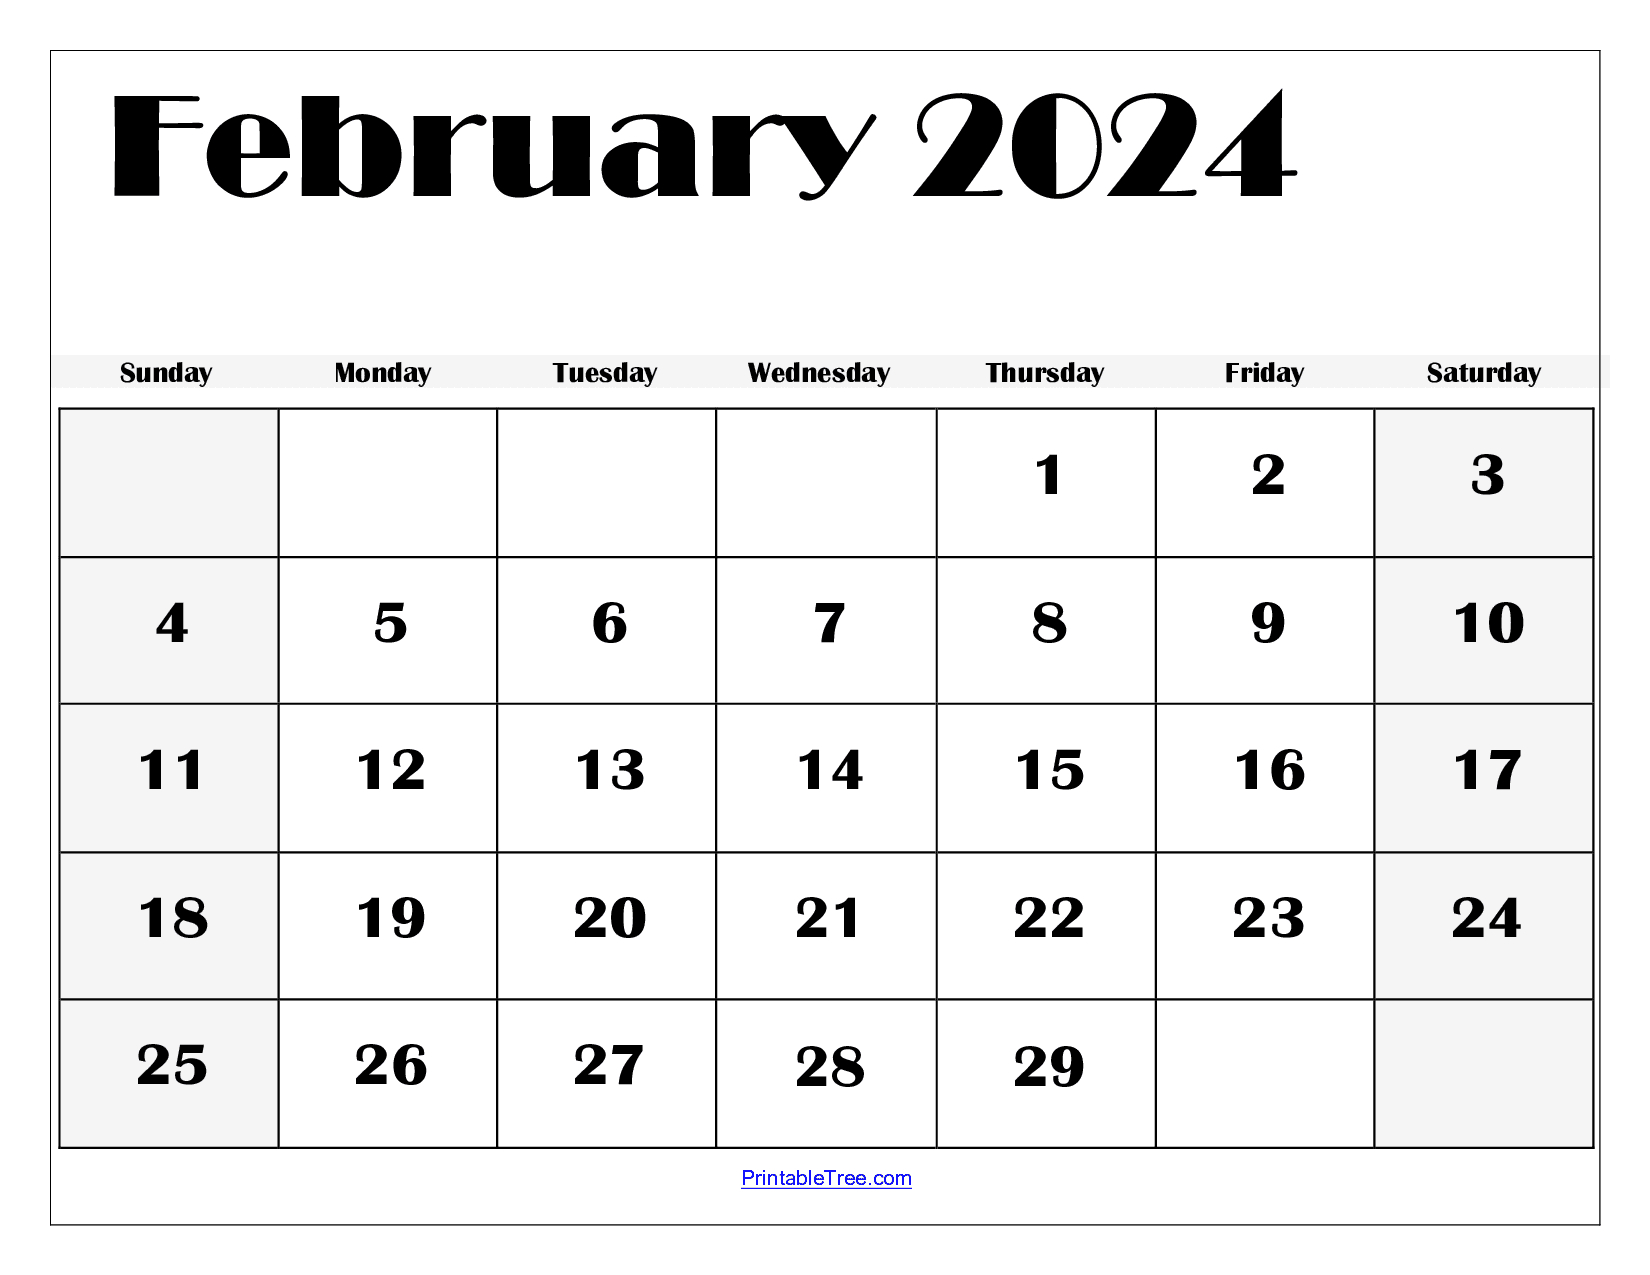 February 2024 Calendar Printable Pdf Template With Holidays | Printable Calendar 2024 Feb